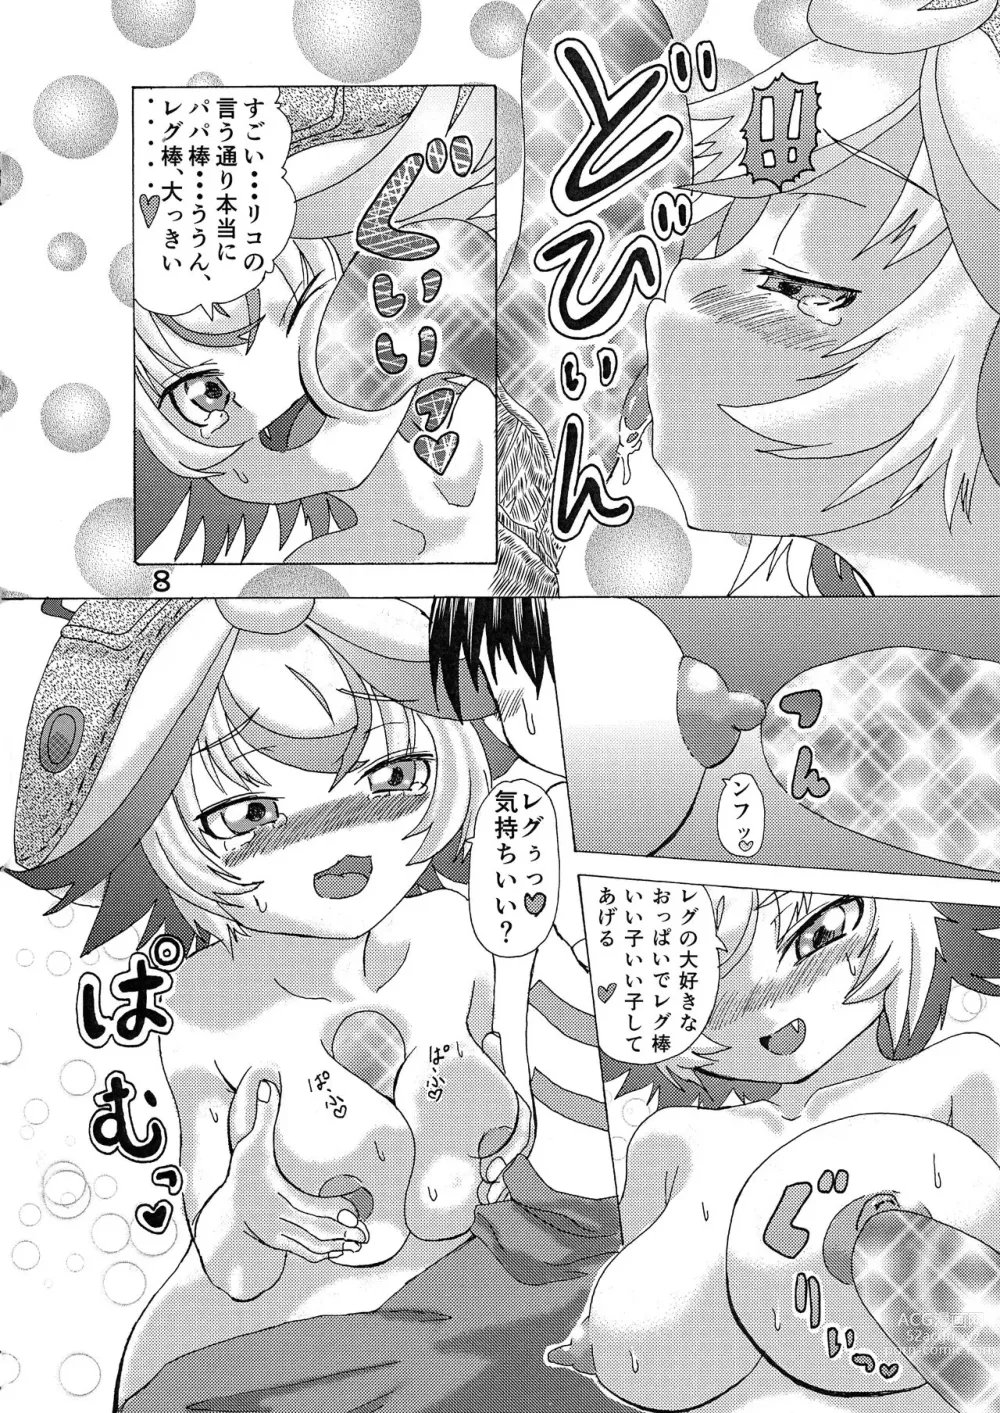 Page 8 of doujinshi SHT45